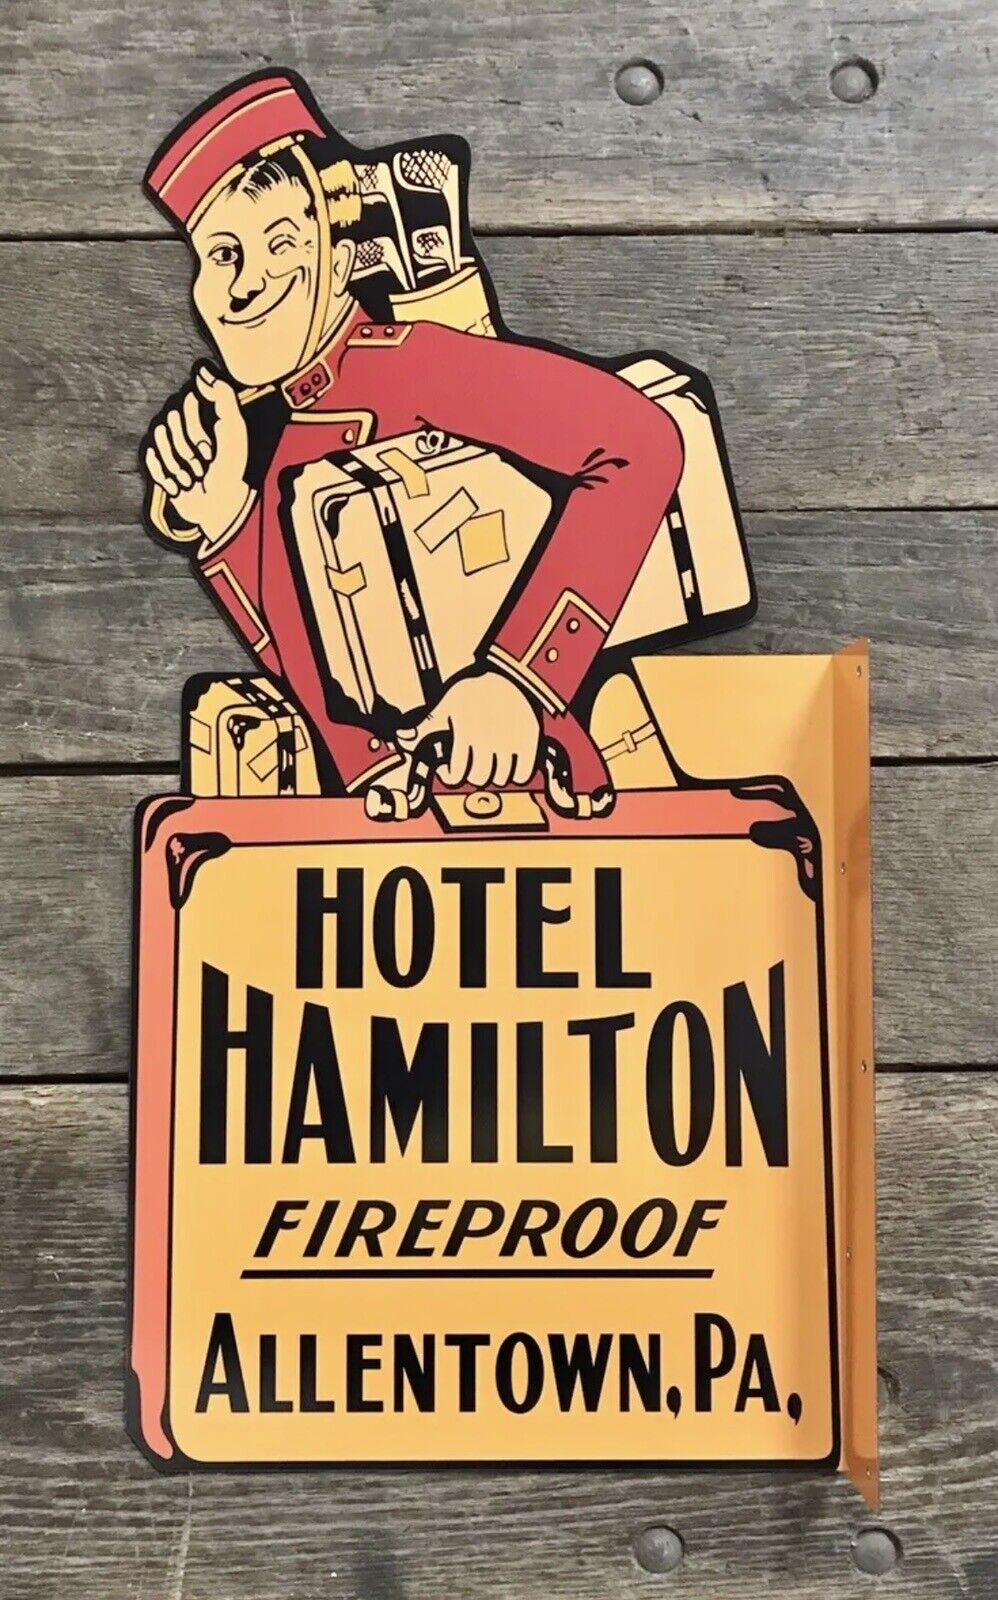 HAMILTON HOTEL “Fireproof”, Allentown, PA, Metal Flange Sign, 23.5” x 12”